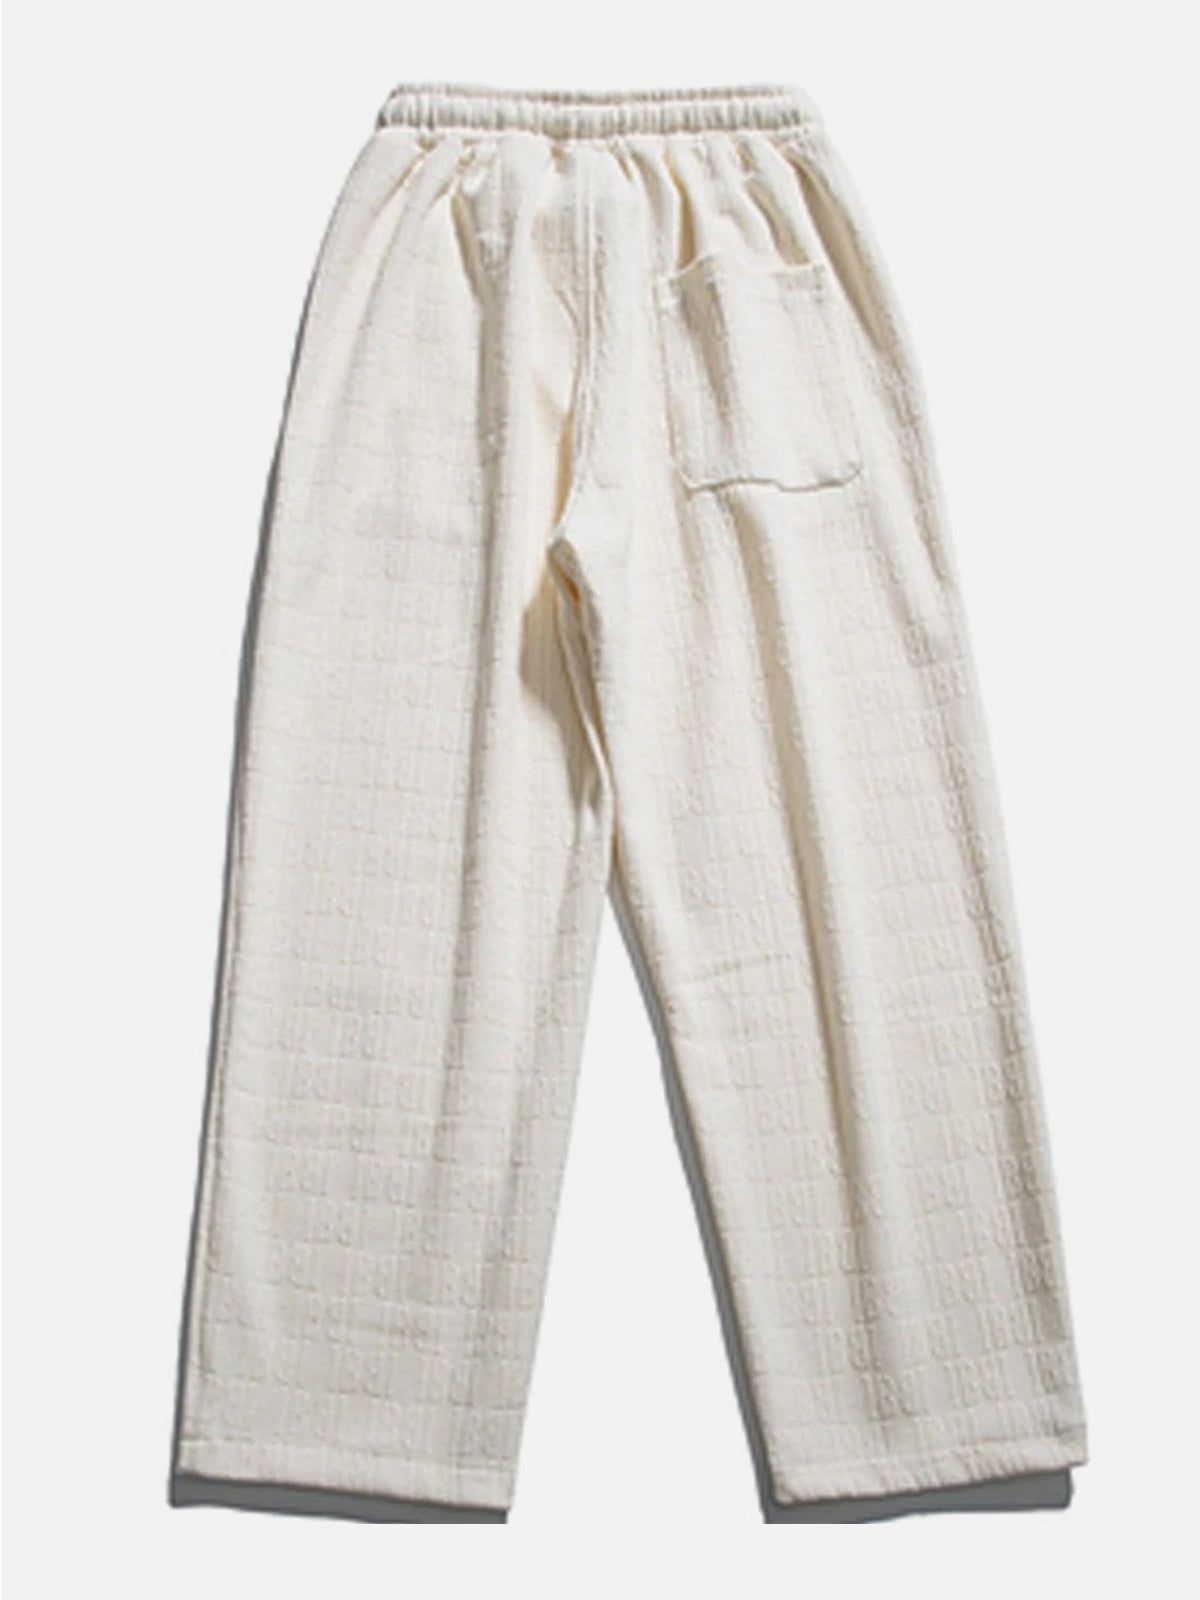 Majesda® - Pure Color Simple Sweatpants outfit ideas streetwear fashion